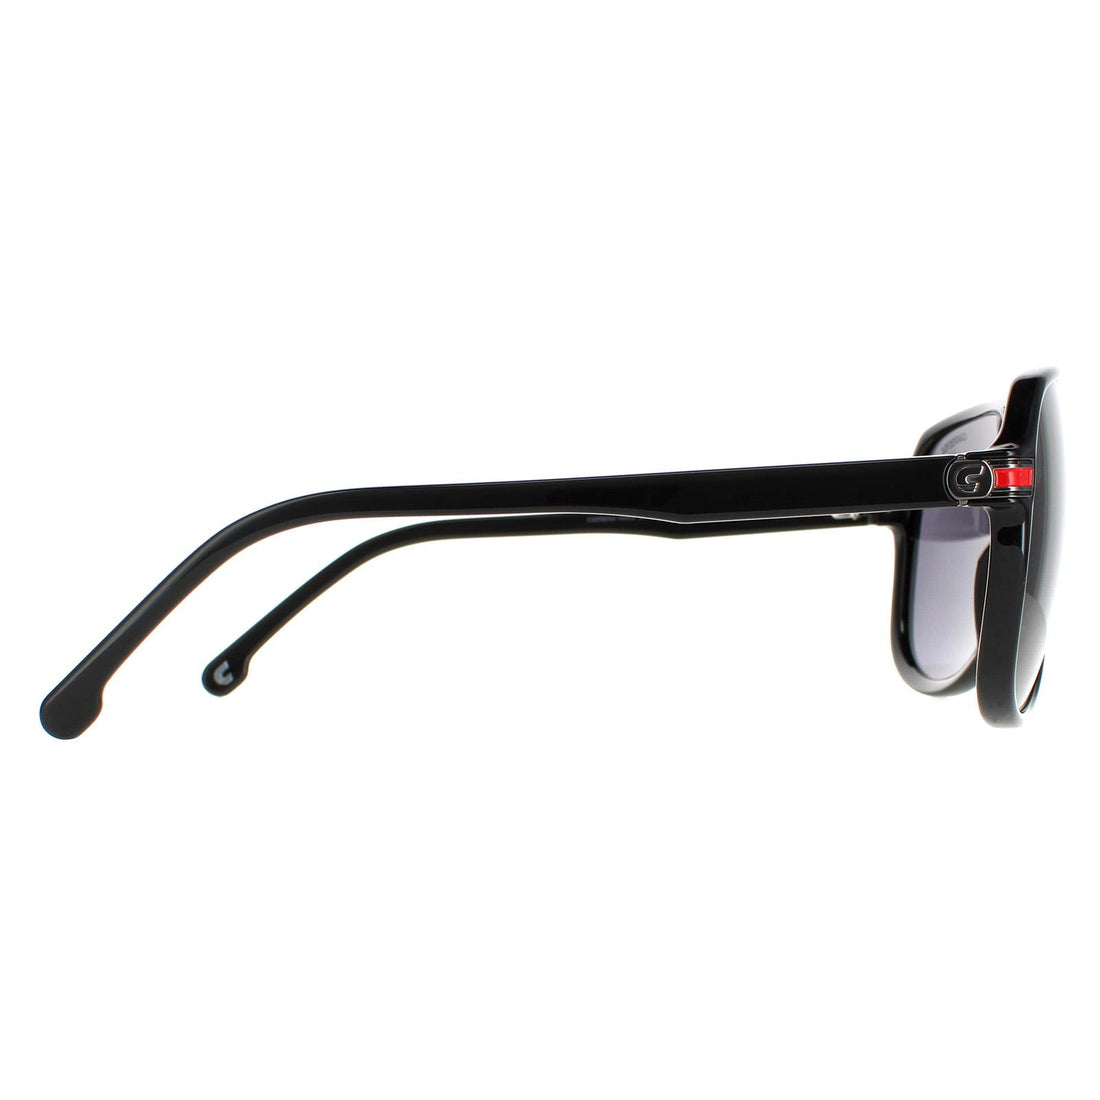 Carrera 1045/S Sunglasses